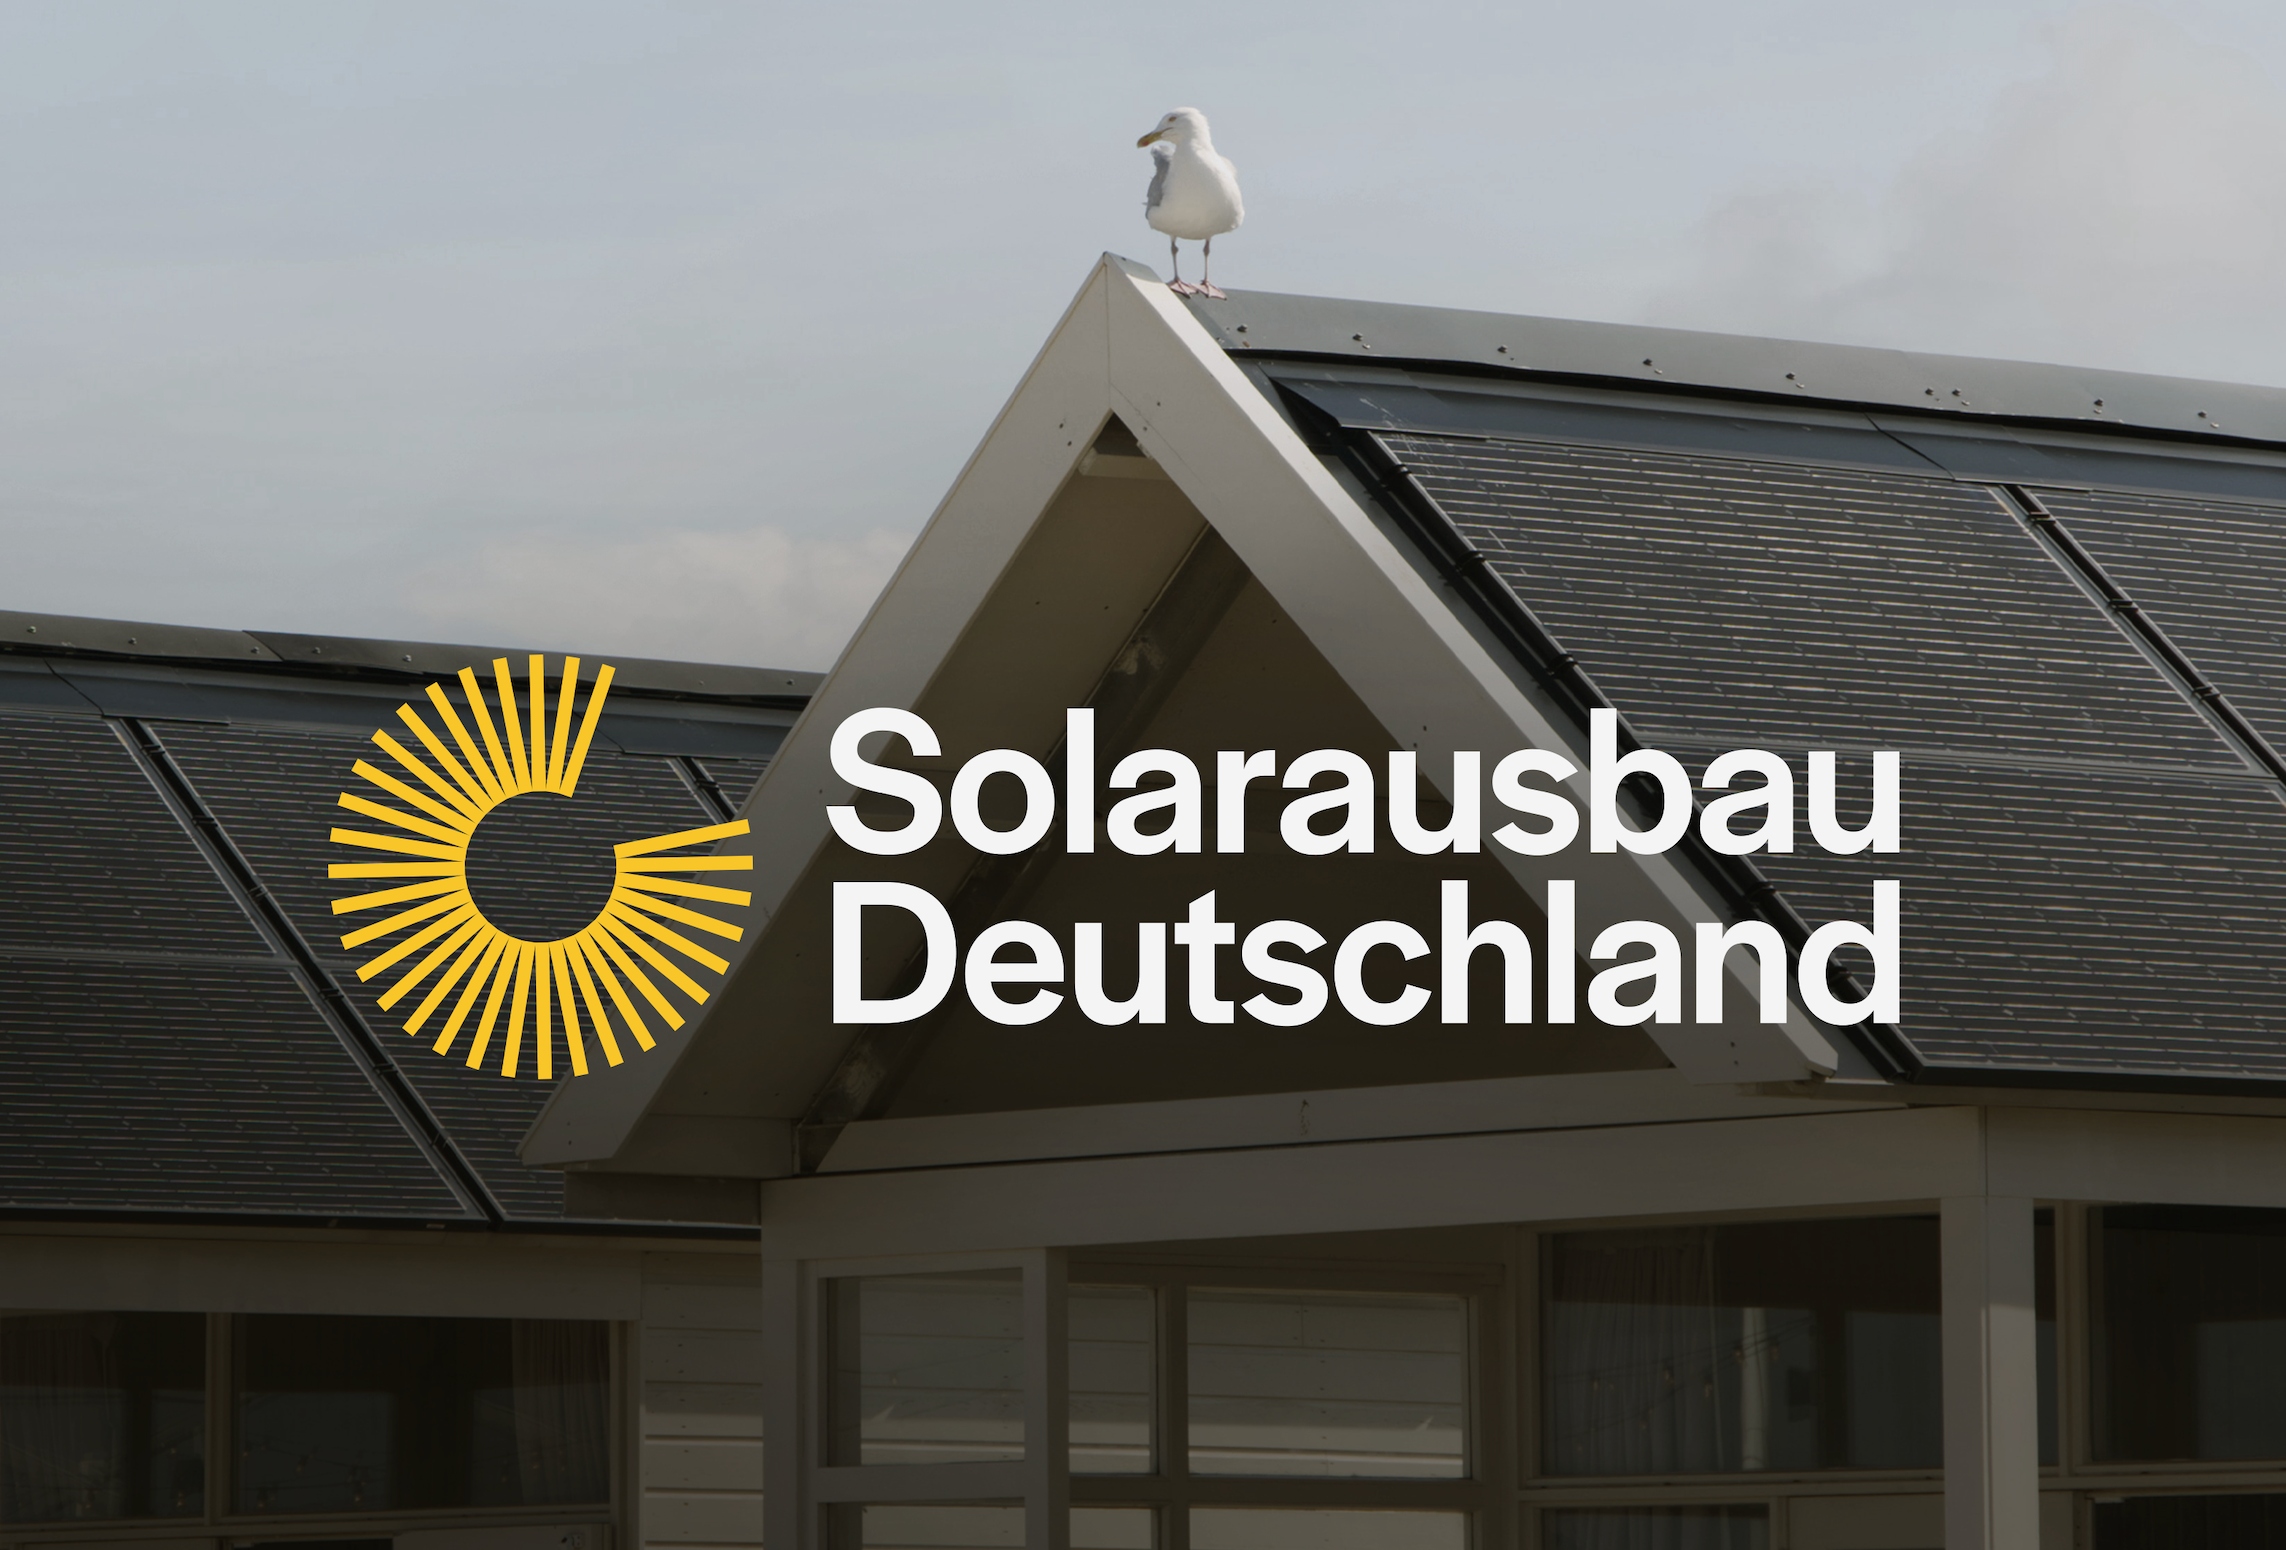 Solarausbau Deutschland Brand Identity Design by Stacy Saturday Studio